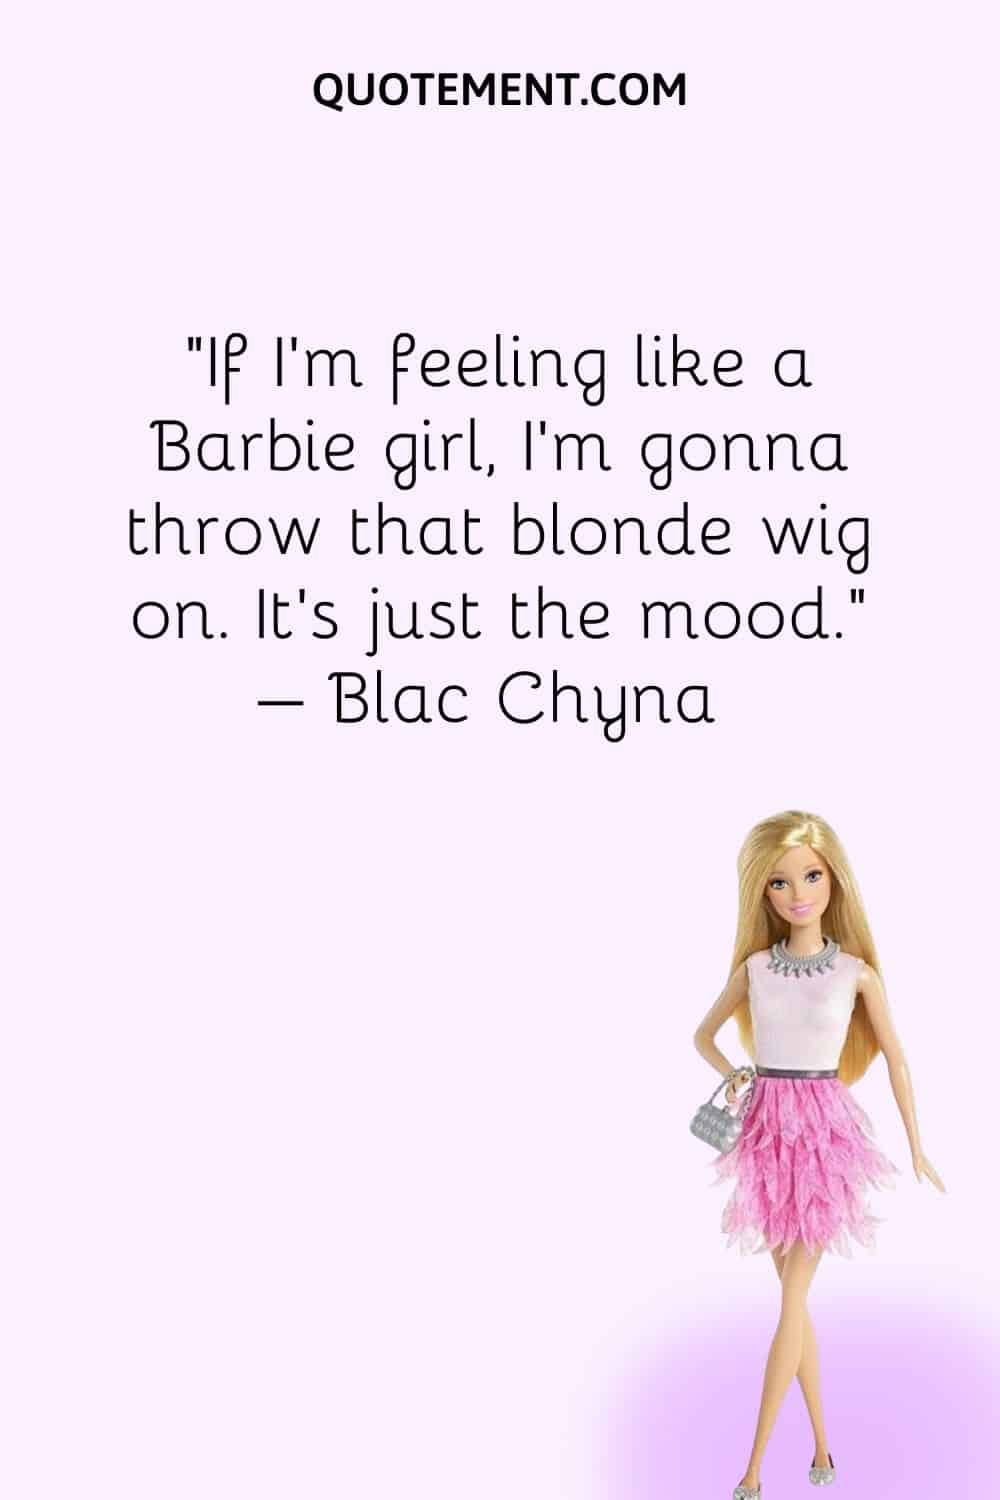 If I'm feeling like a Barbie girl, I'm gonna throw that blonde wig on